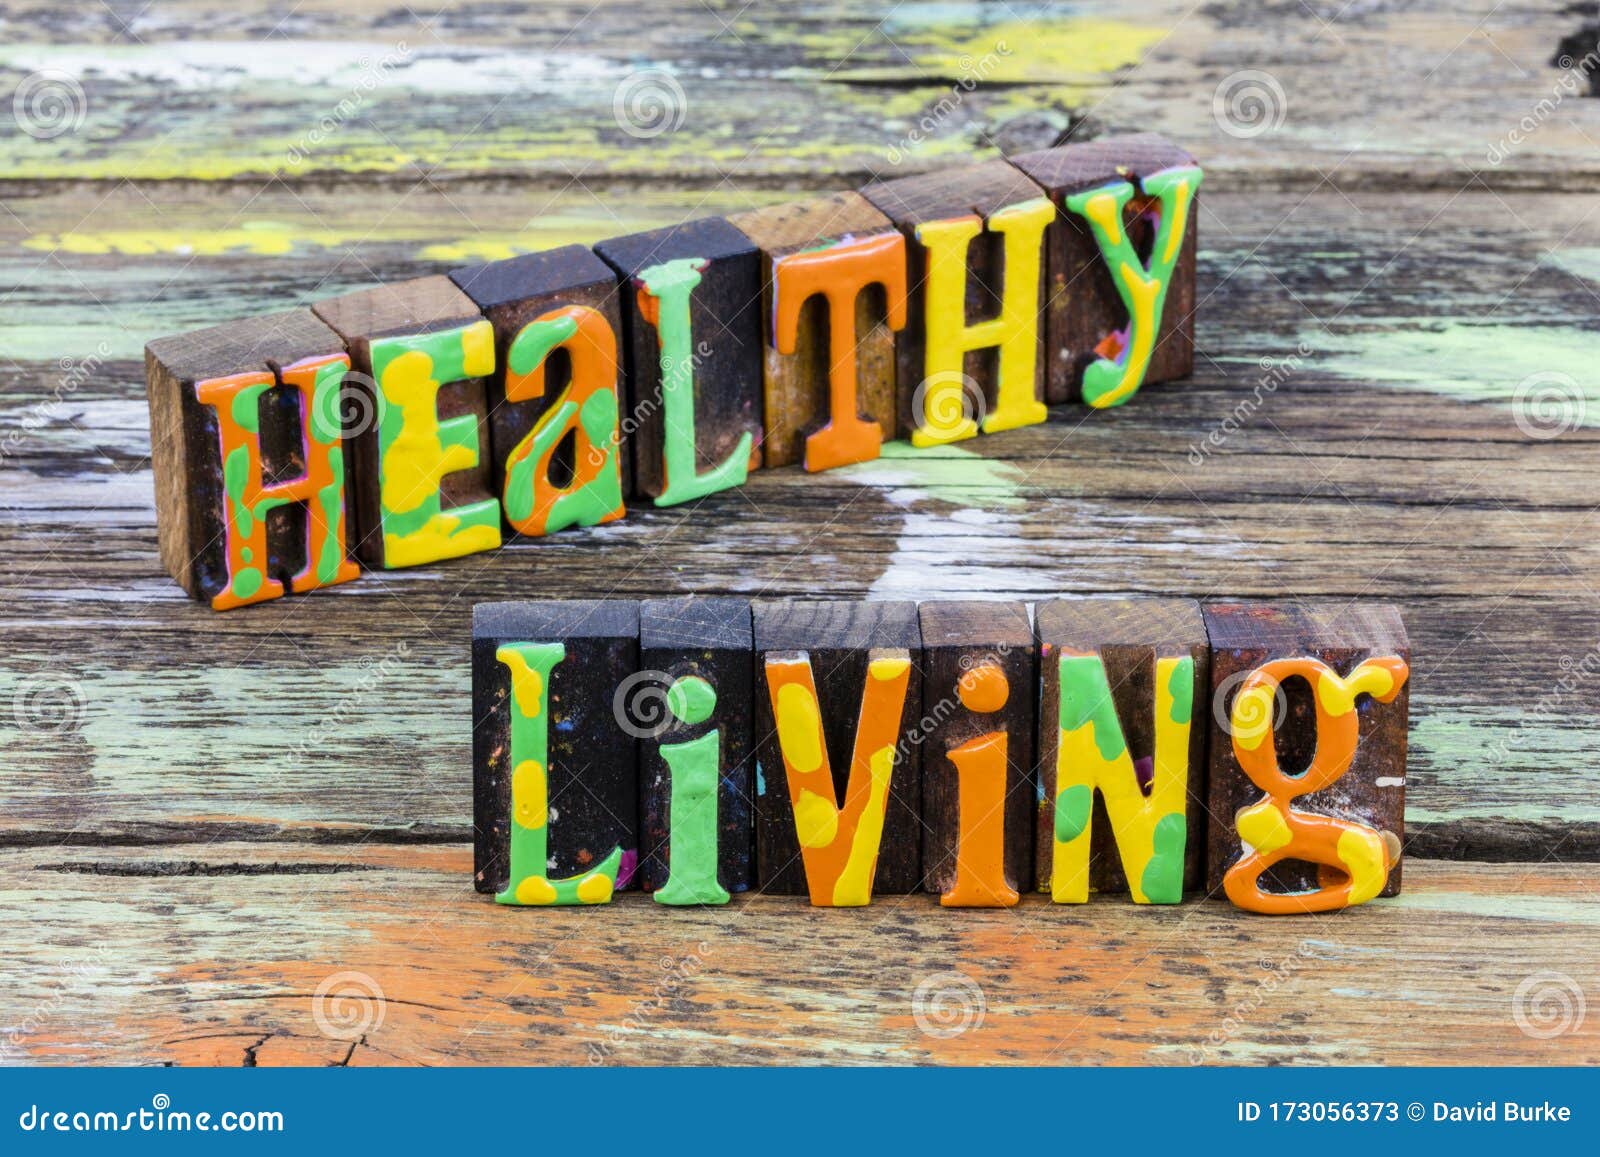 Men's Health Month — 13 tips on living a happy, healthy life - SLMA Blog